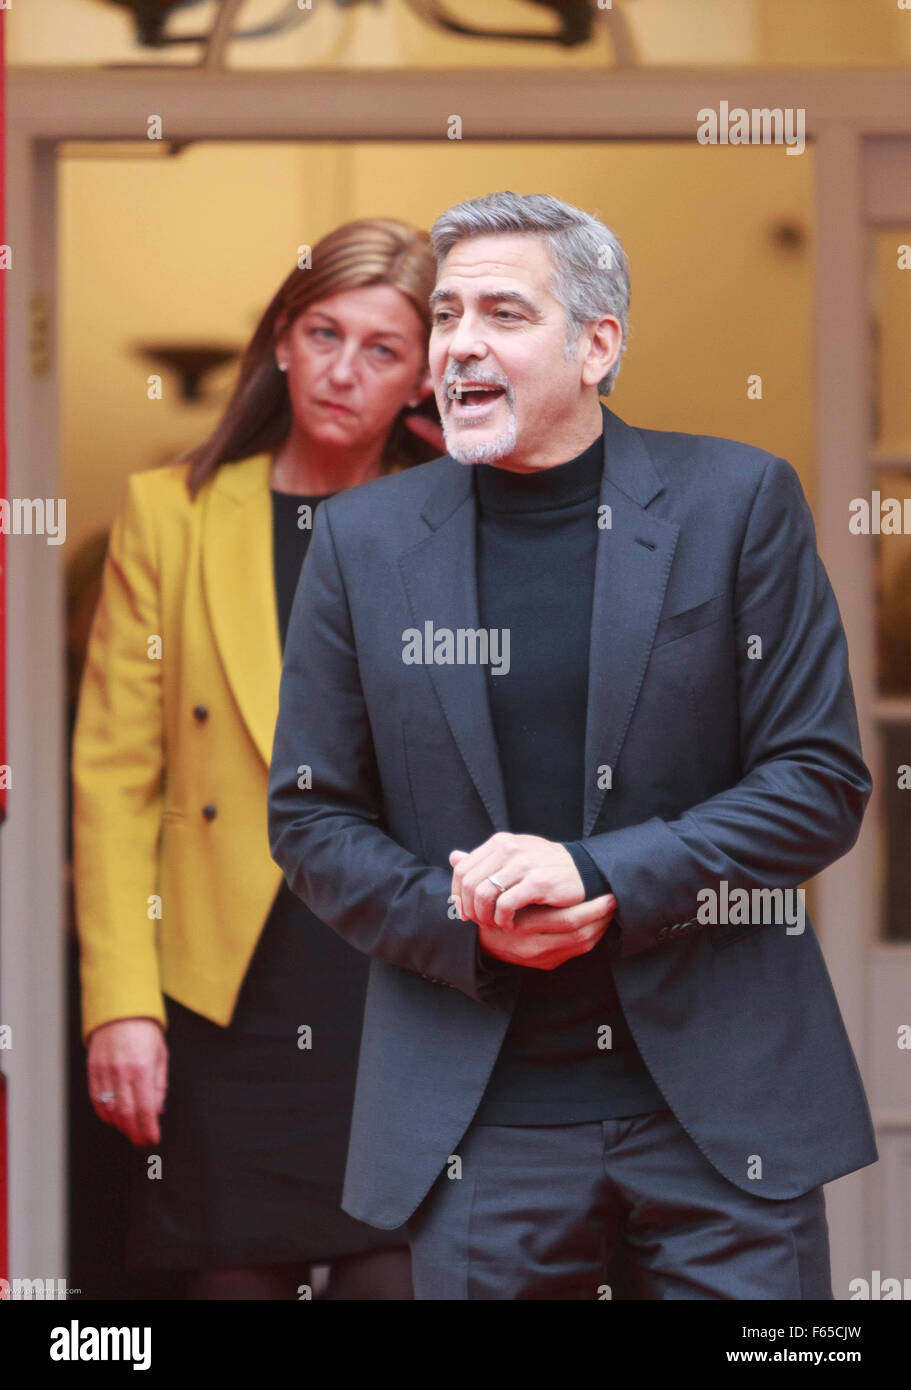 Edinburgh, UK. 12 November. George Clooney seen in Edinburgh. Pictured George Clooney. Pako Mera/Alamy Live News. Stock Photo